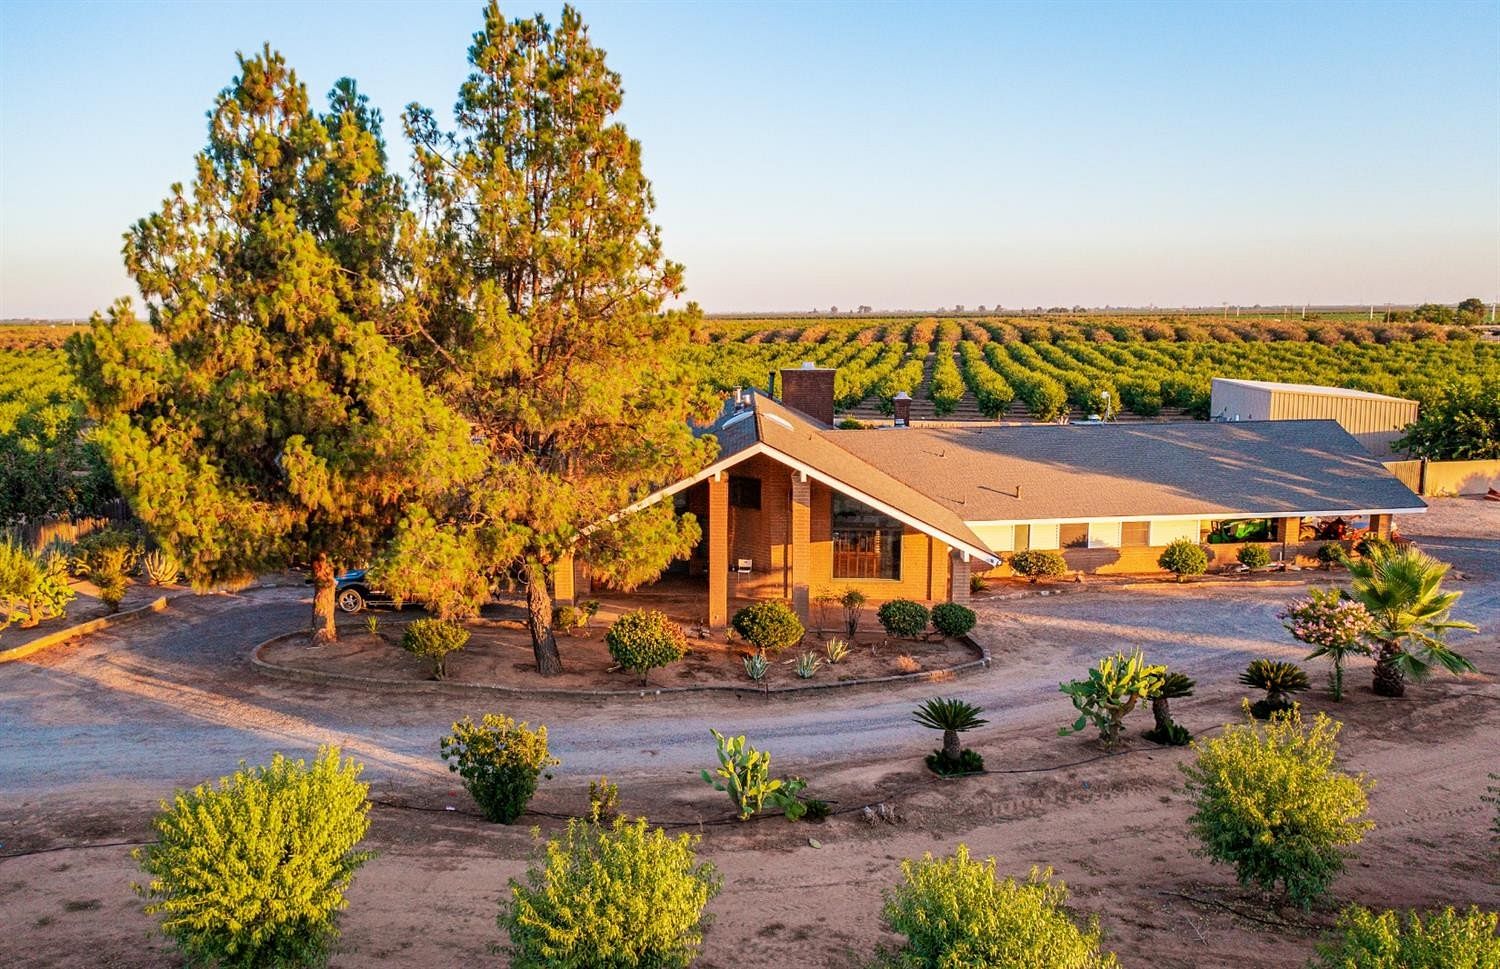 36 Acres of Agricultural Land & Home Fresno, California, CA